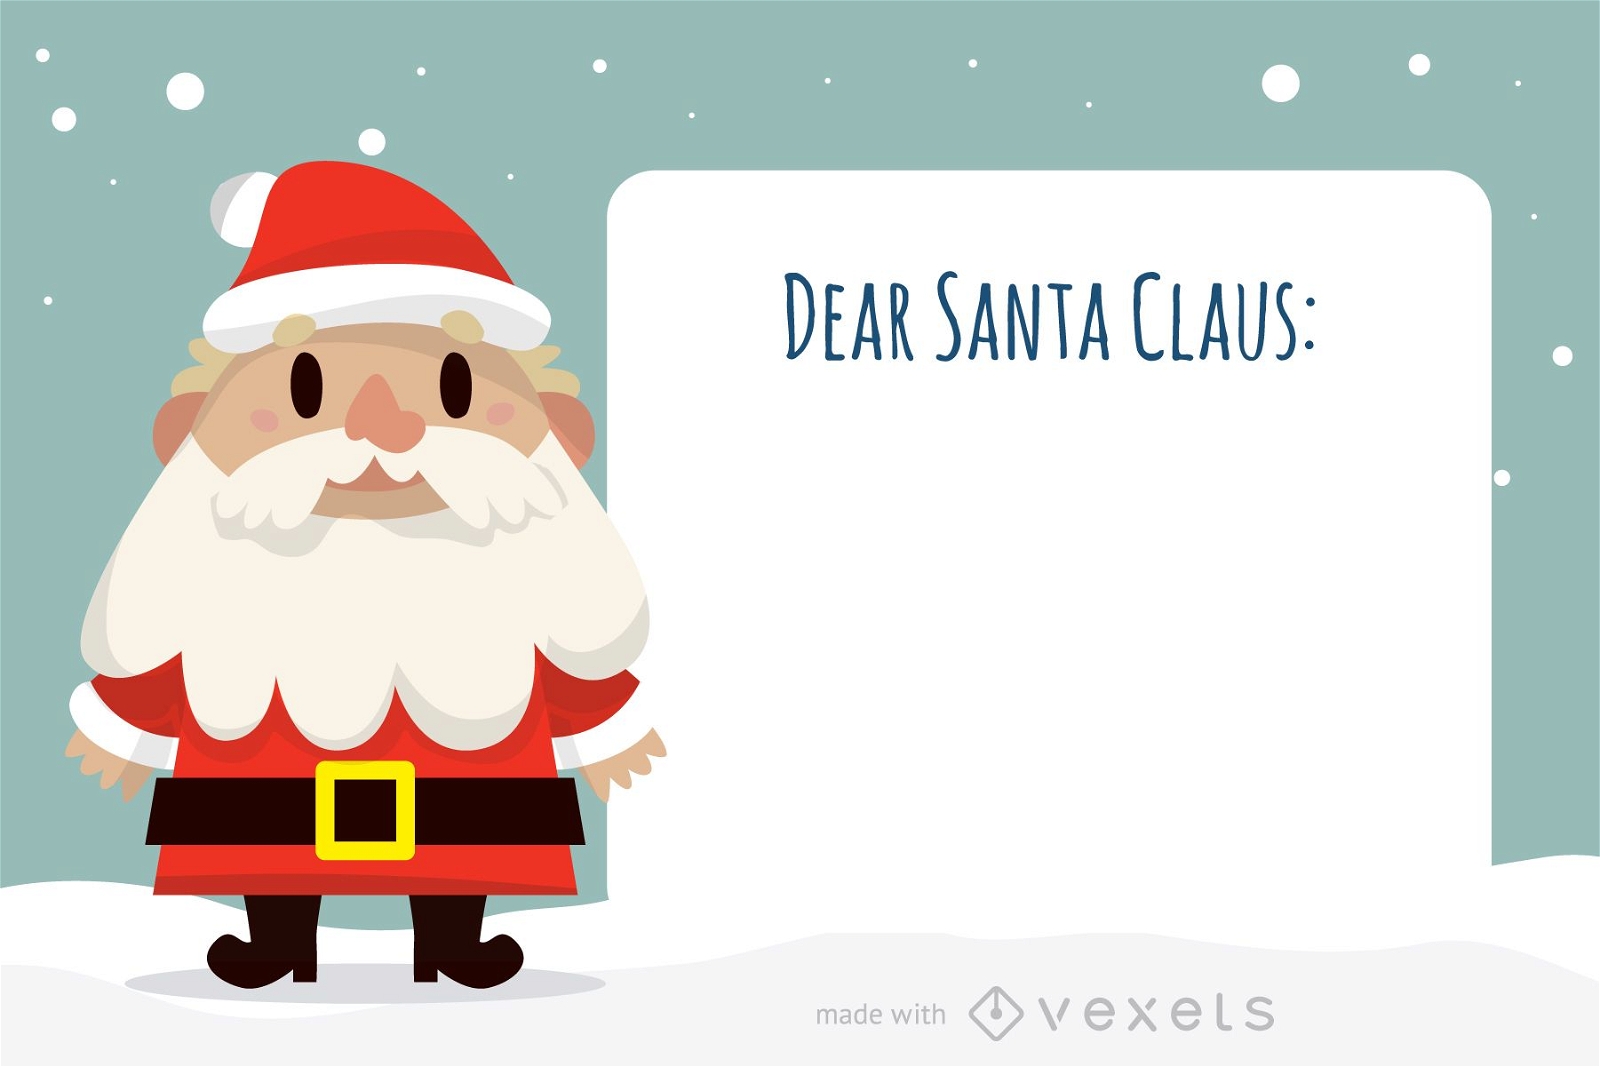 Dear Santa Claus letter maker